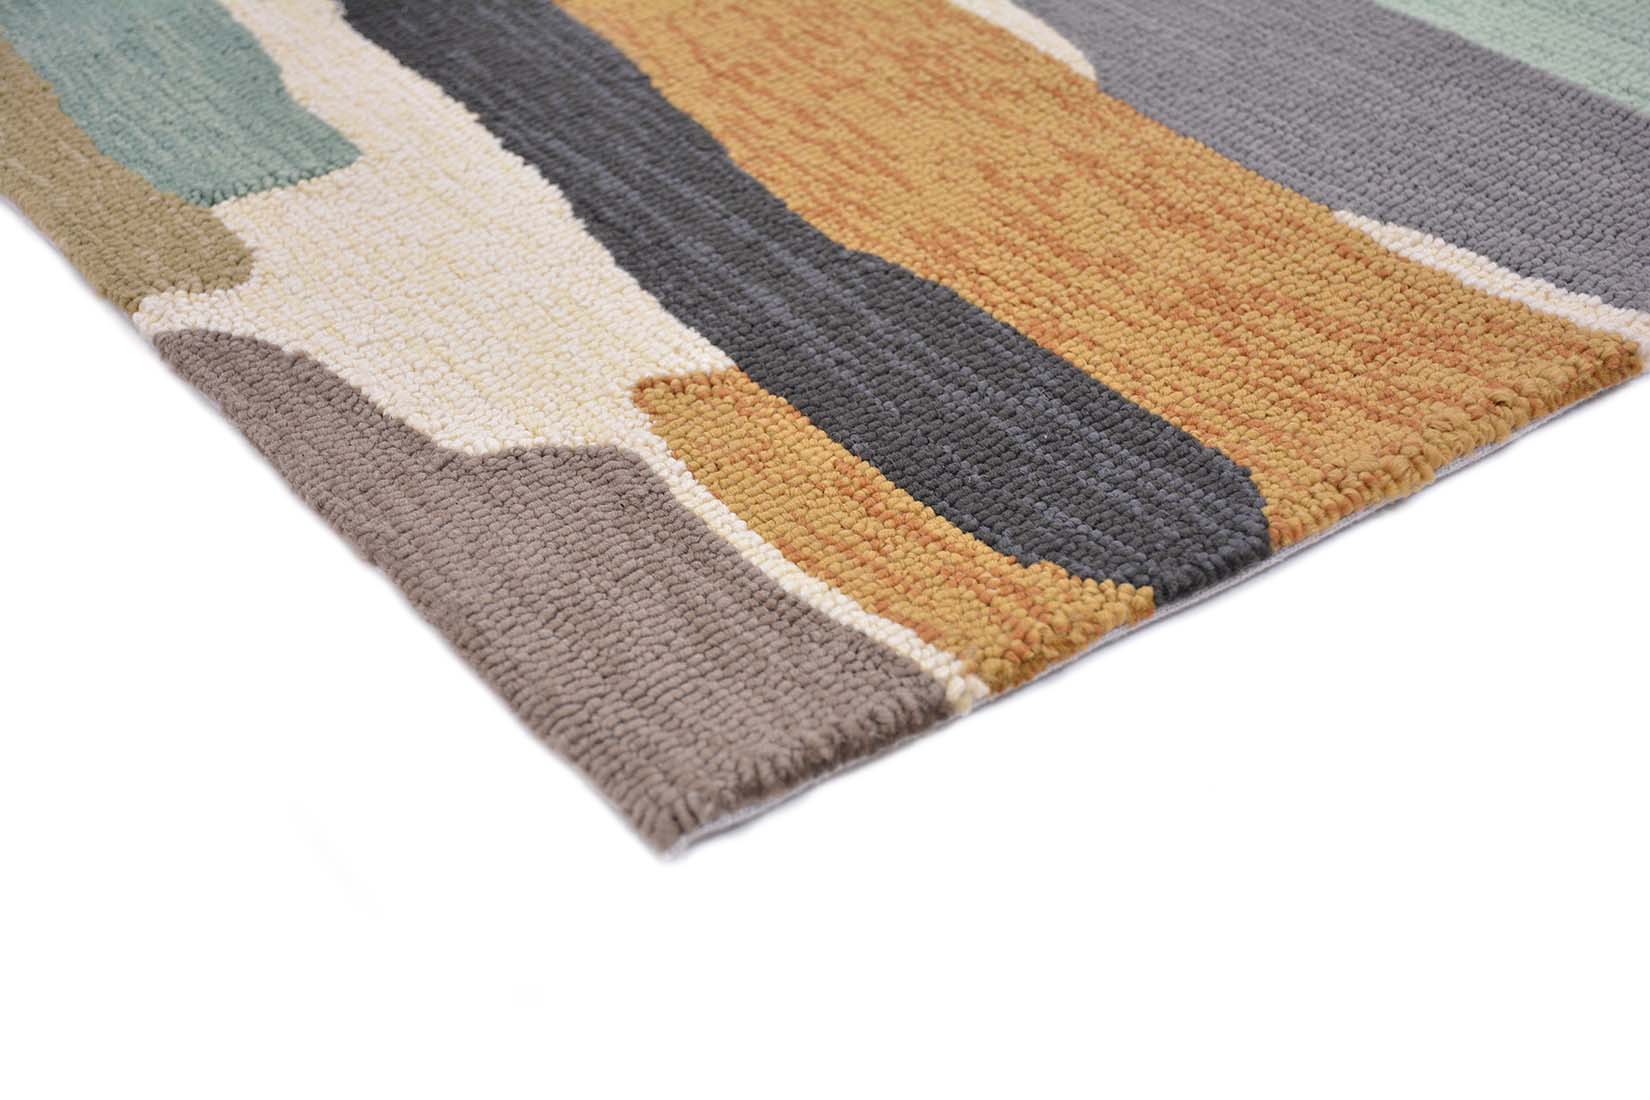 multicolour abstract indoor/outdoor rug
